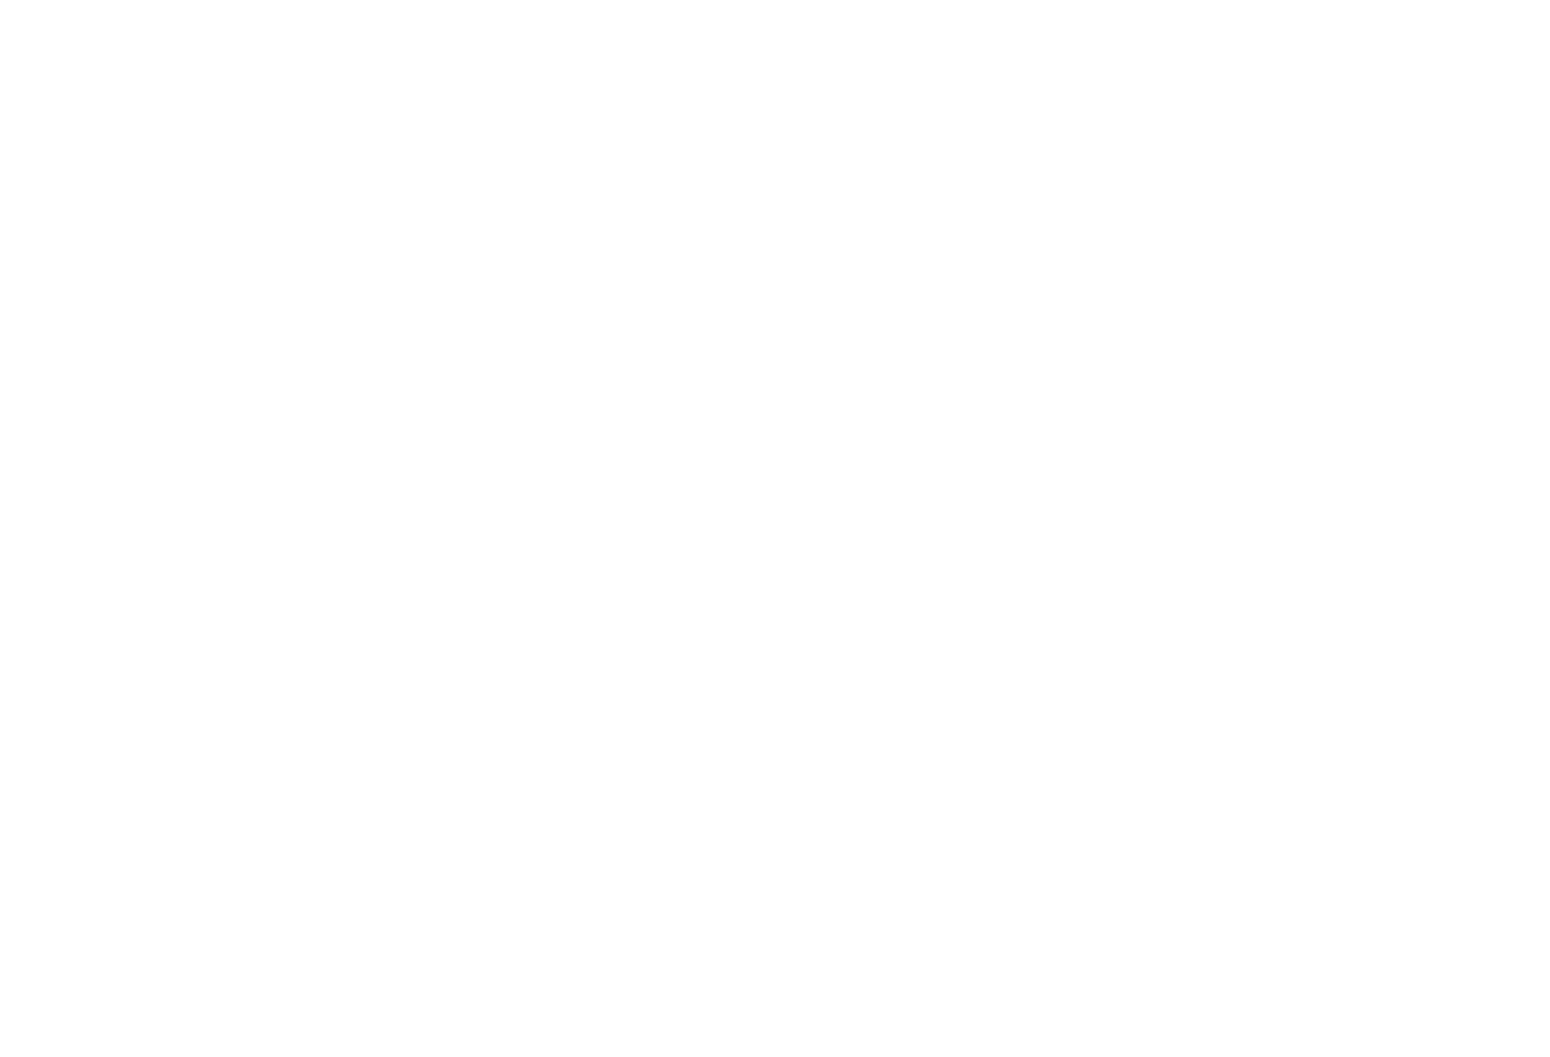 Asseco logo for dark backgrounds (transparent PNG)